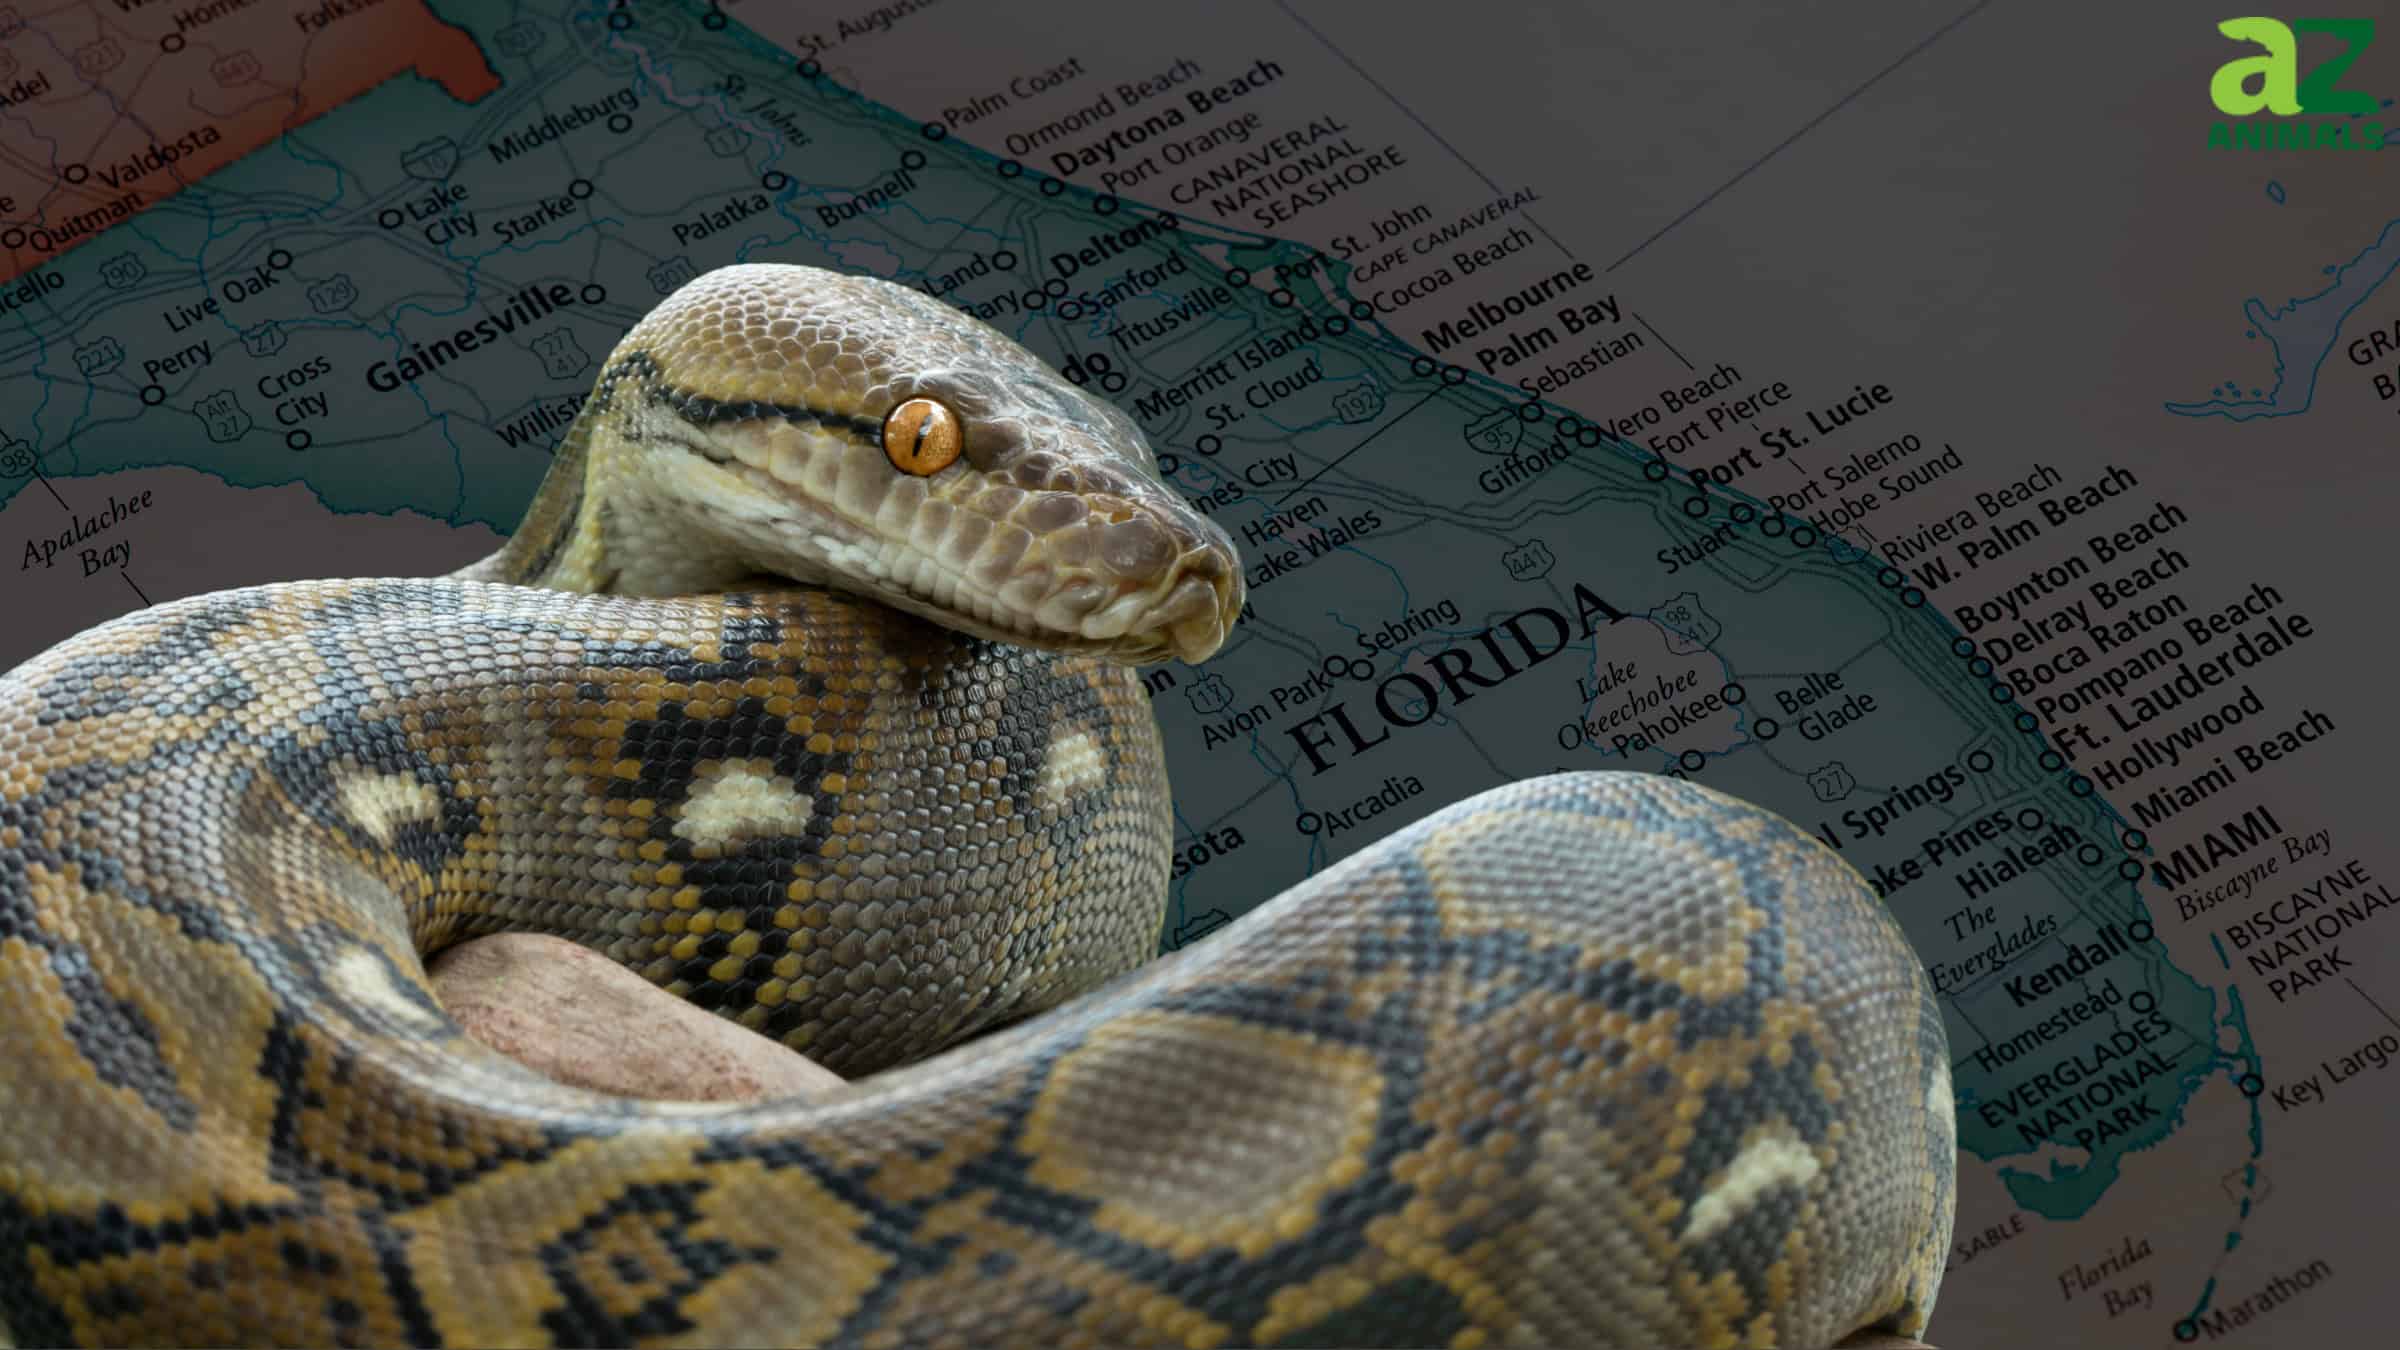 Python in Florida